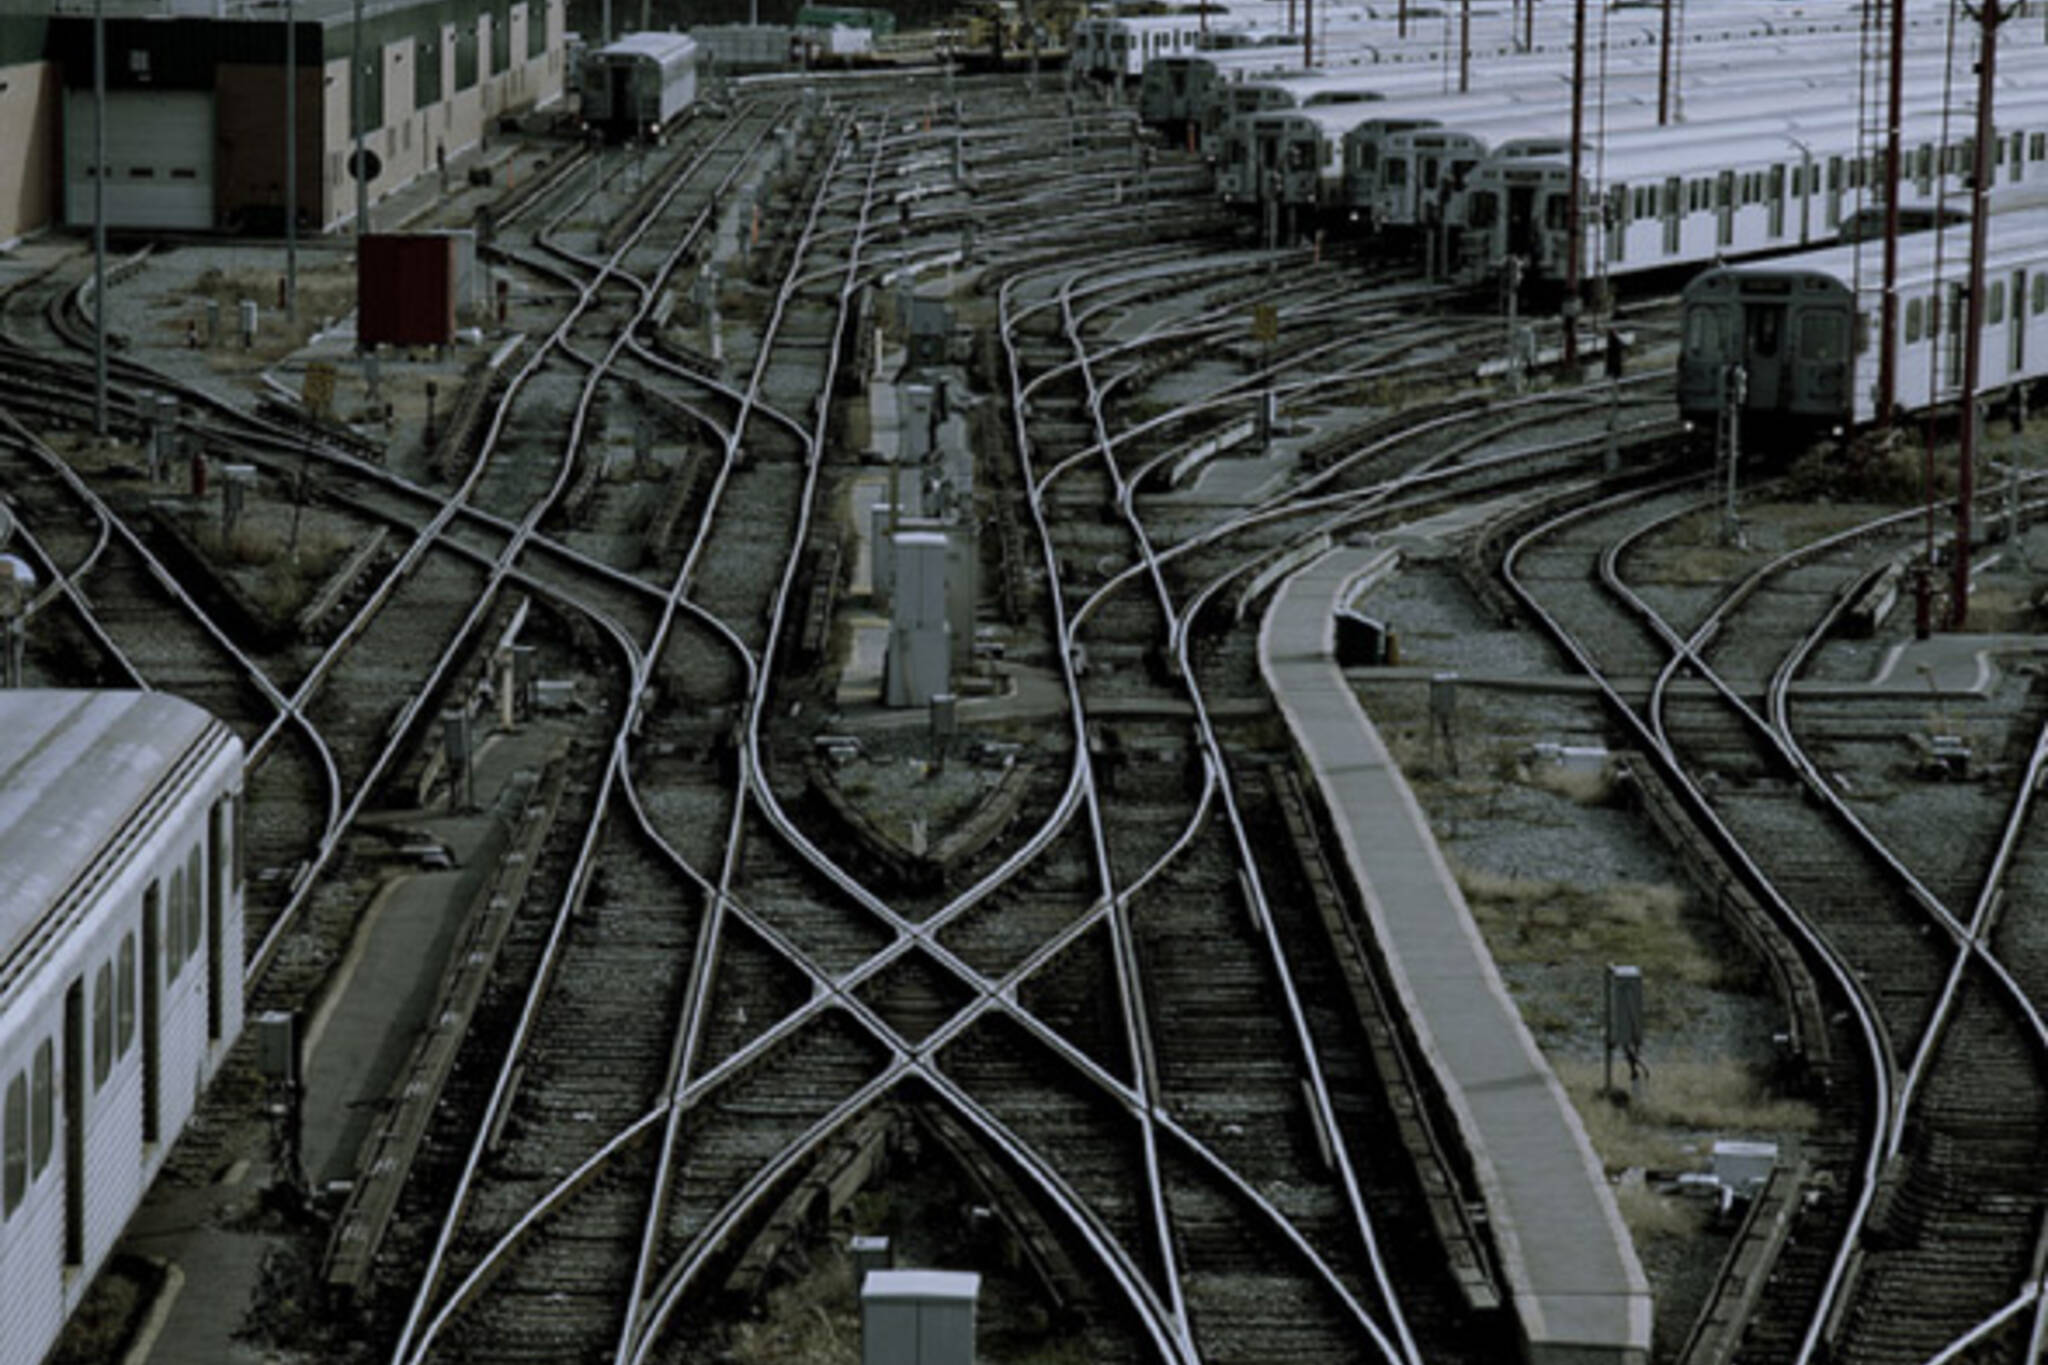 TTC Train Yards